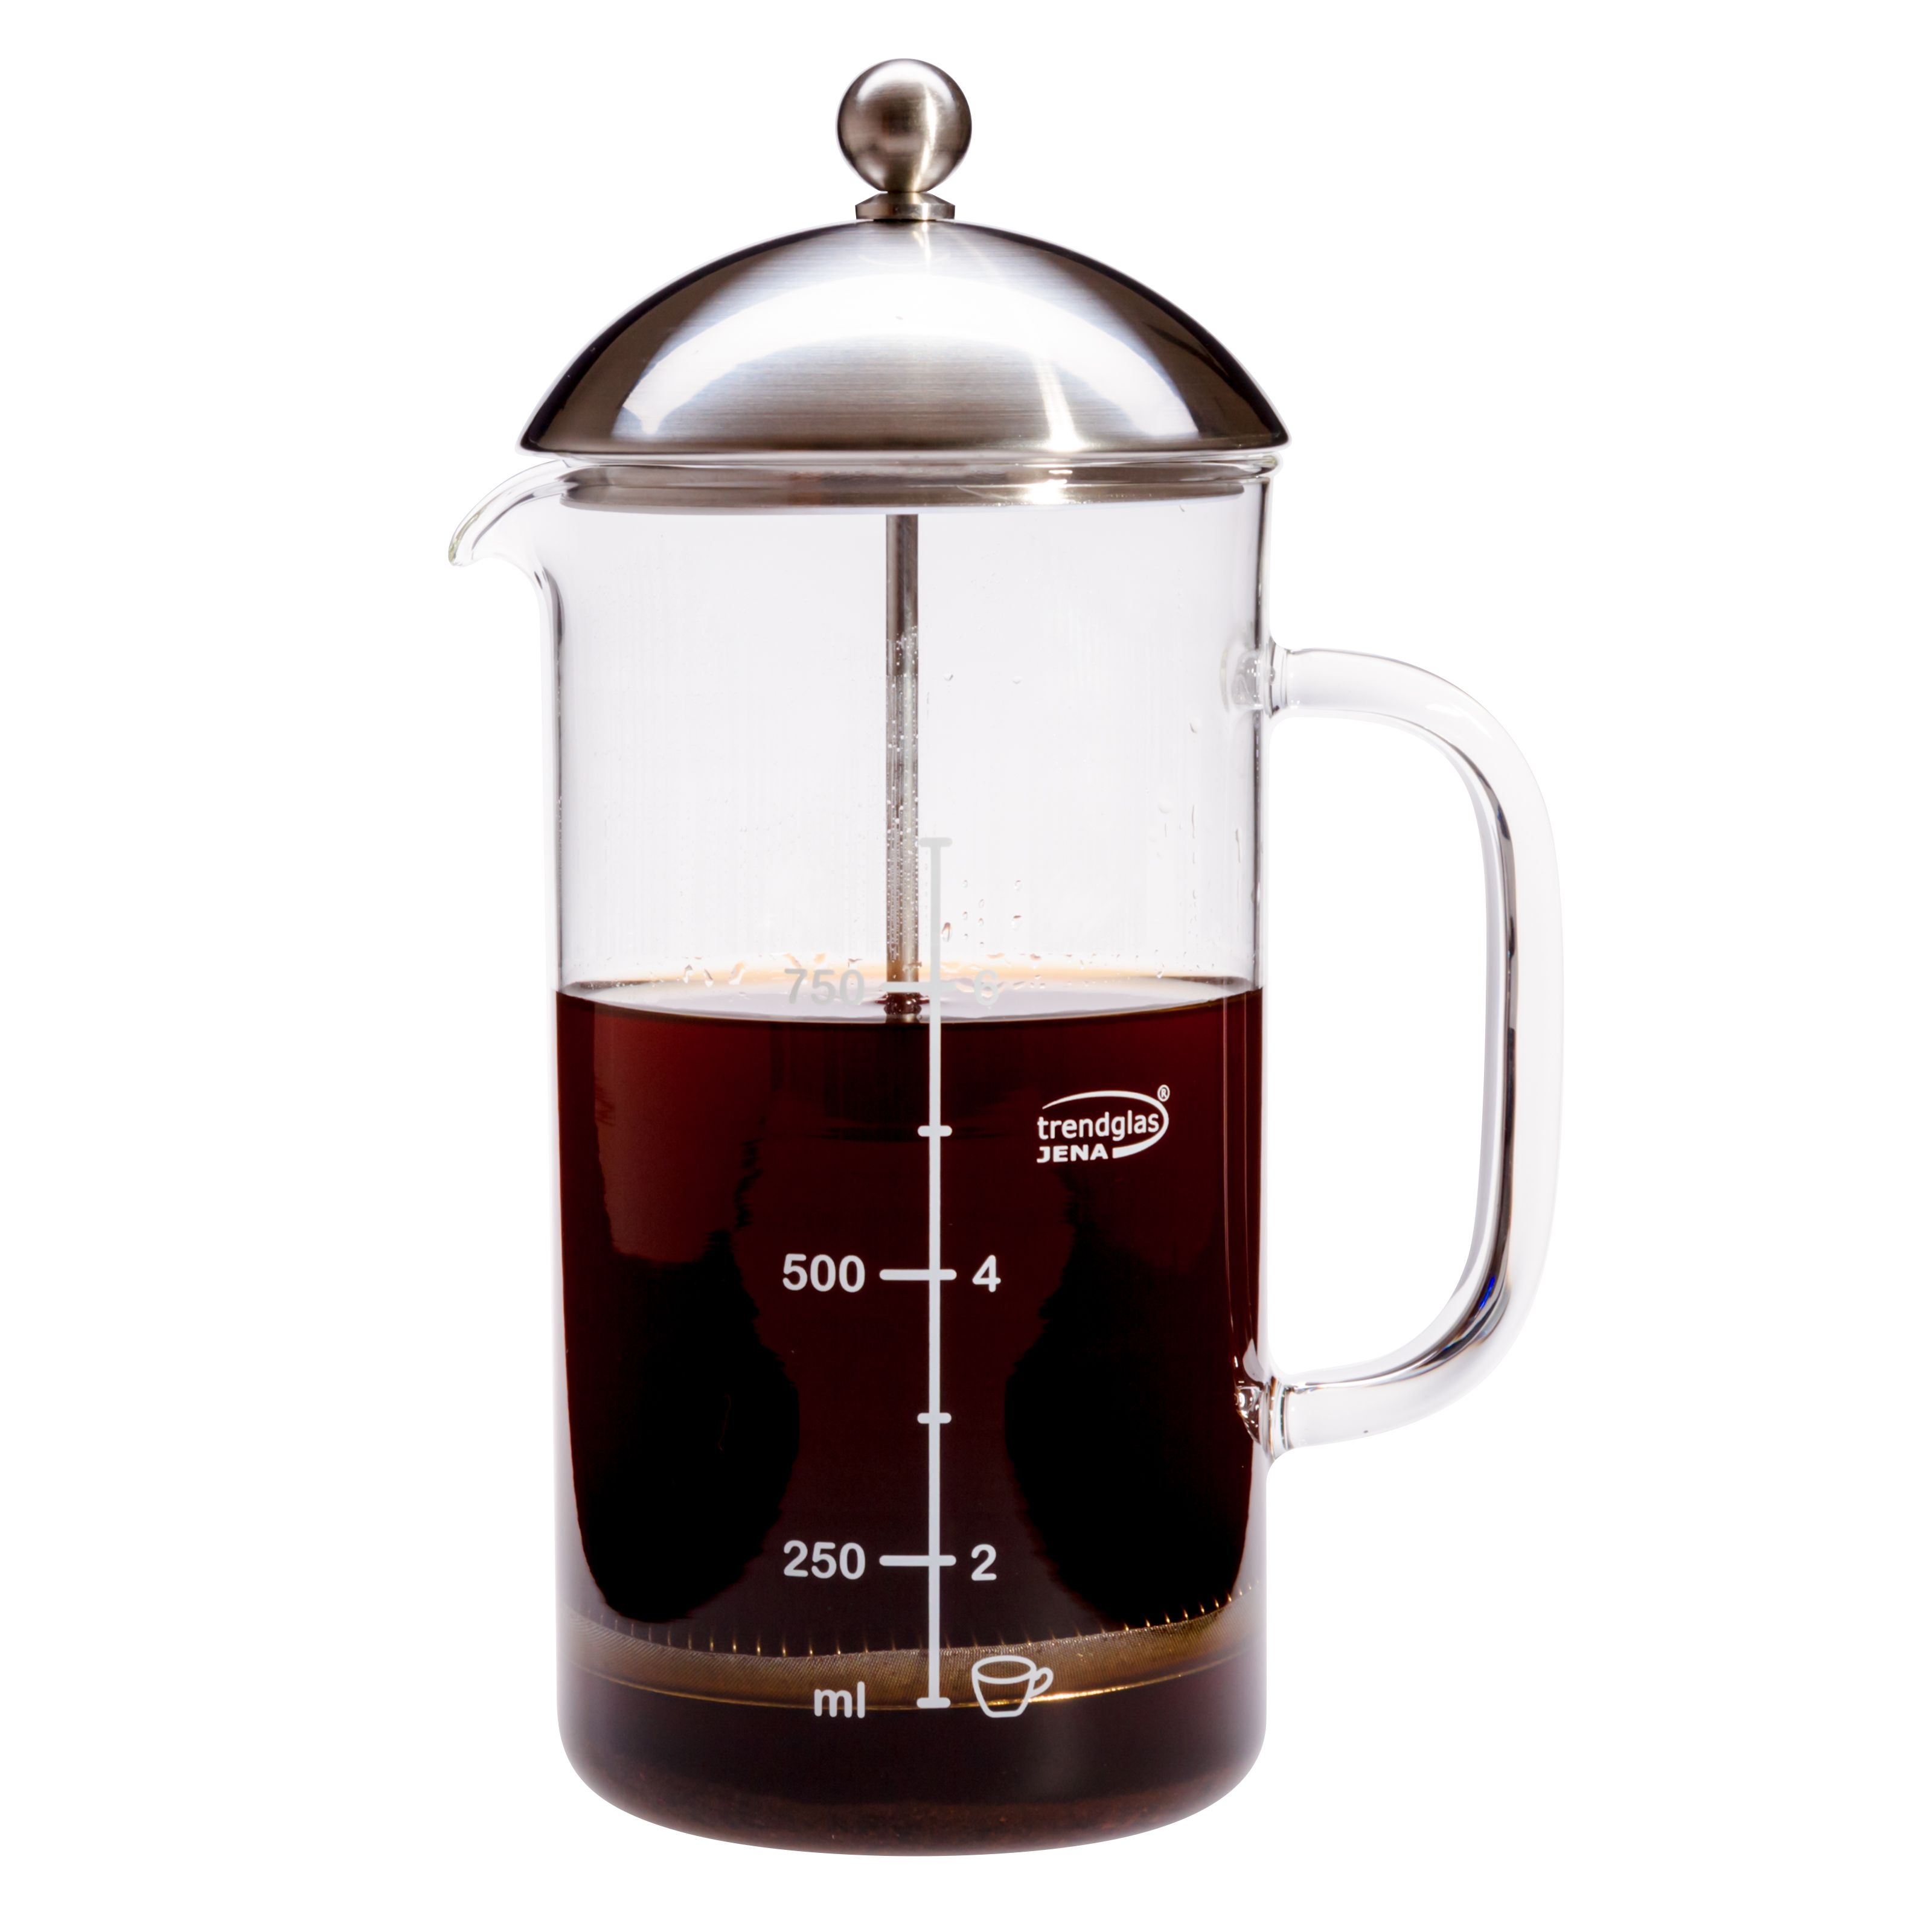 Trendglas Jena - Coffee maker - 8 cups